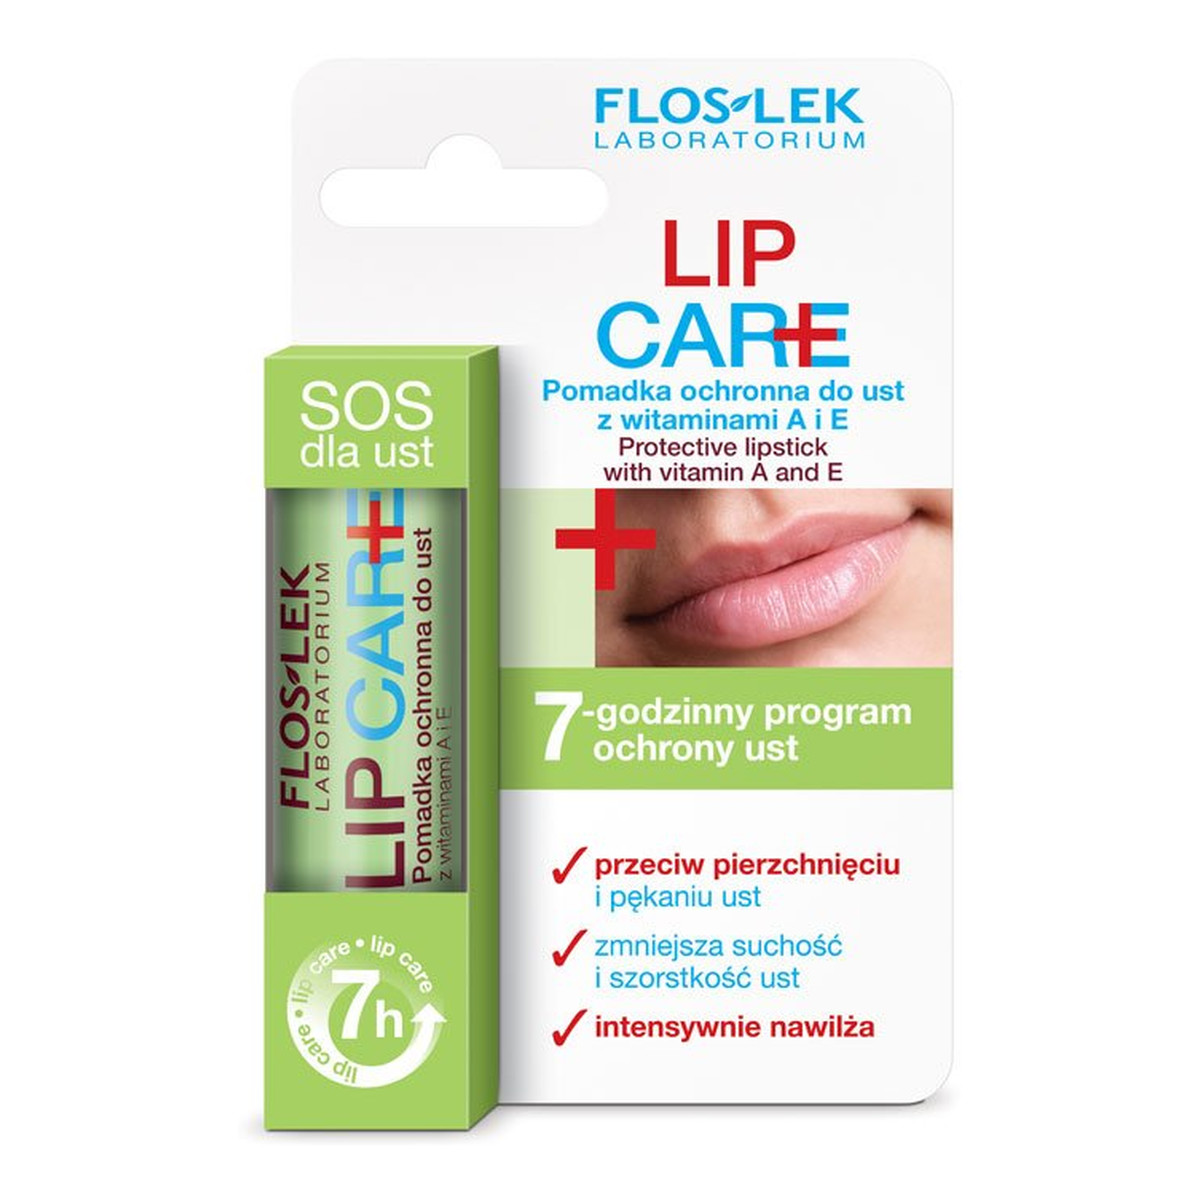 FlosLek Labolatorium Lip Care Pomadka Ochronna do Ust z Witaminami A i E